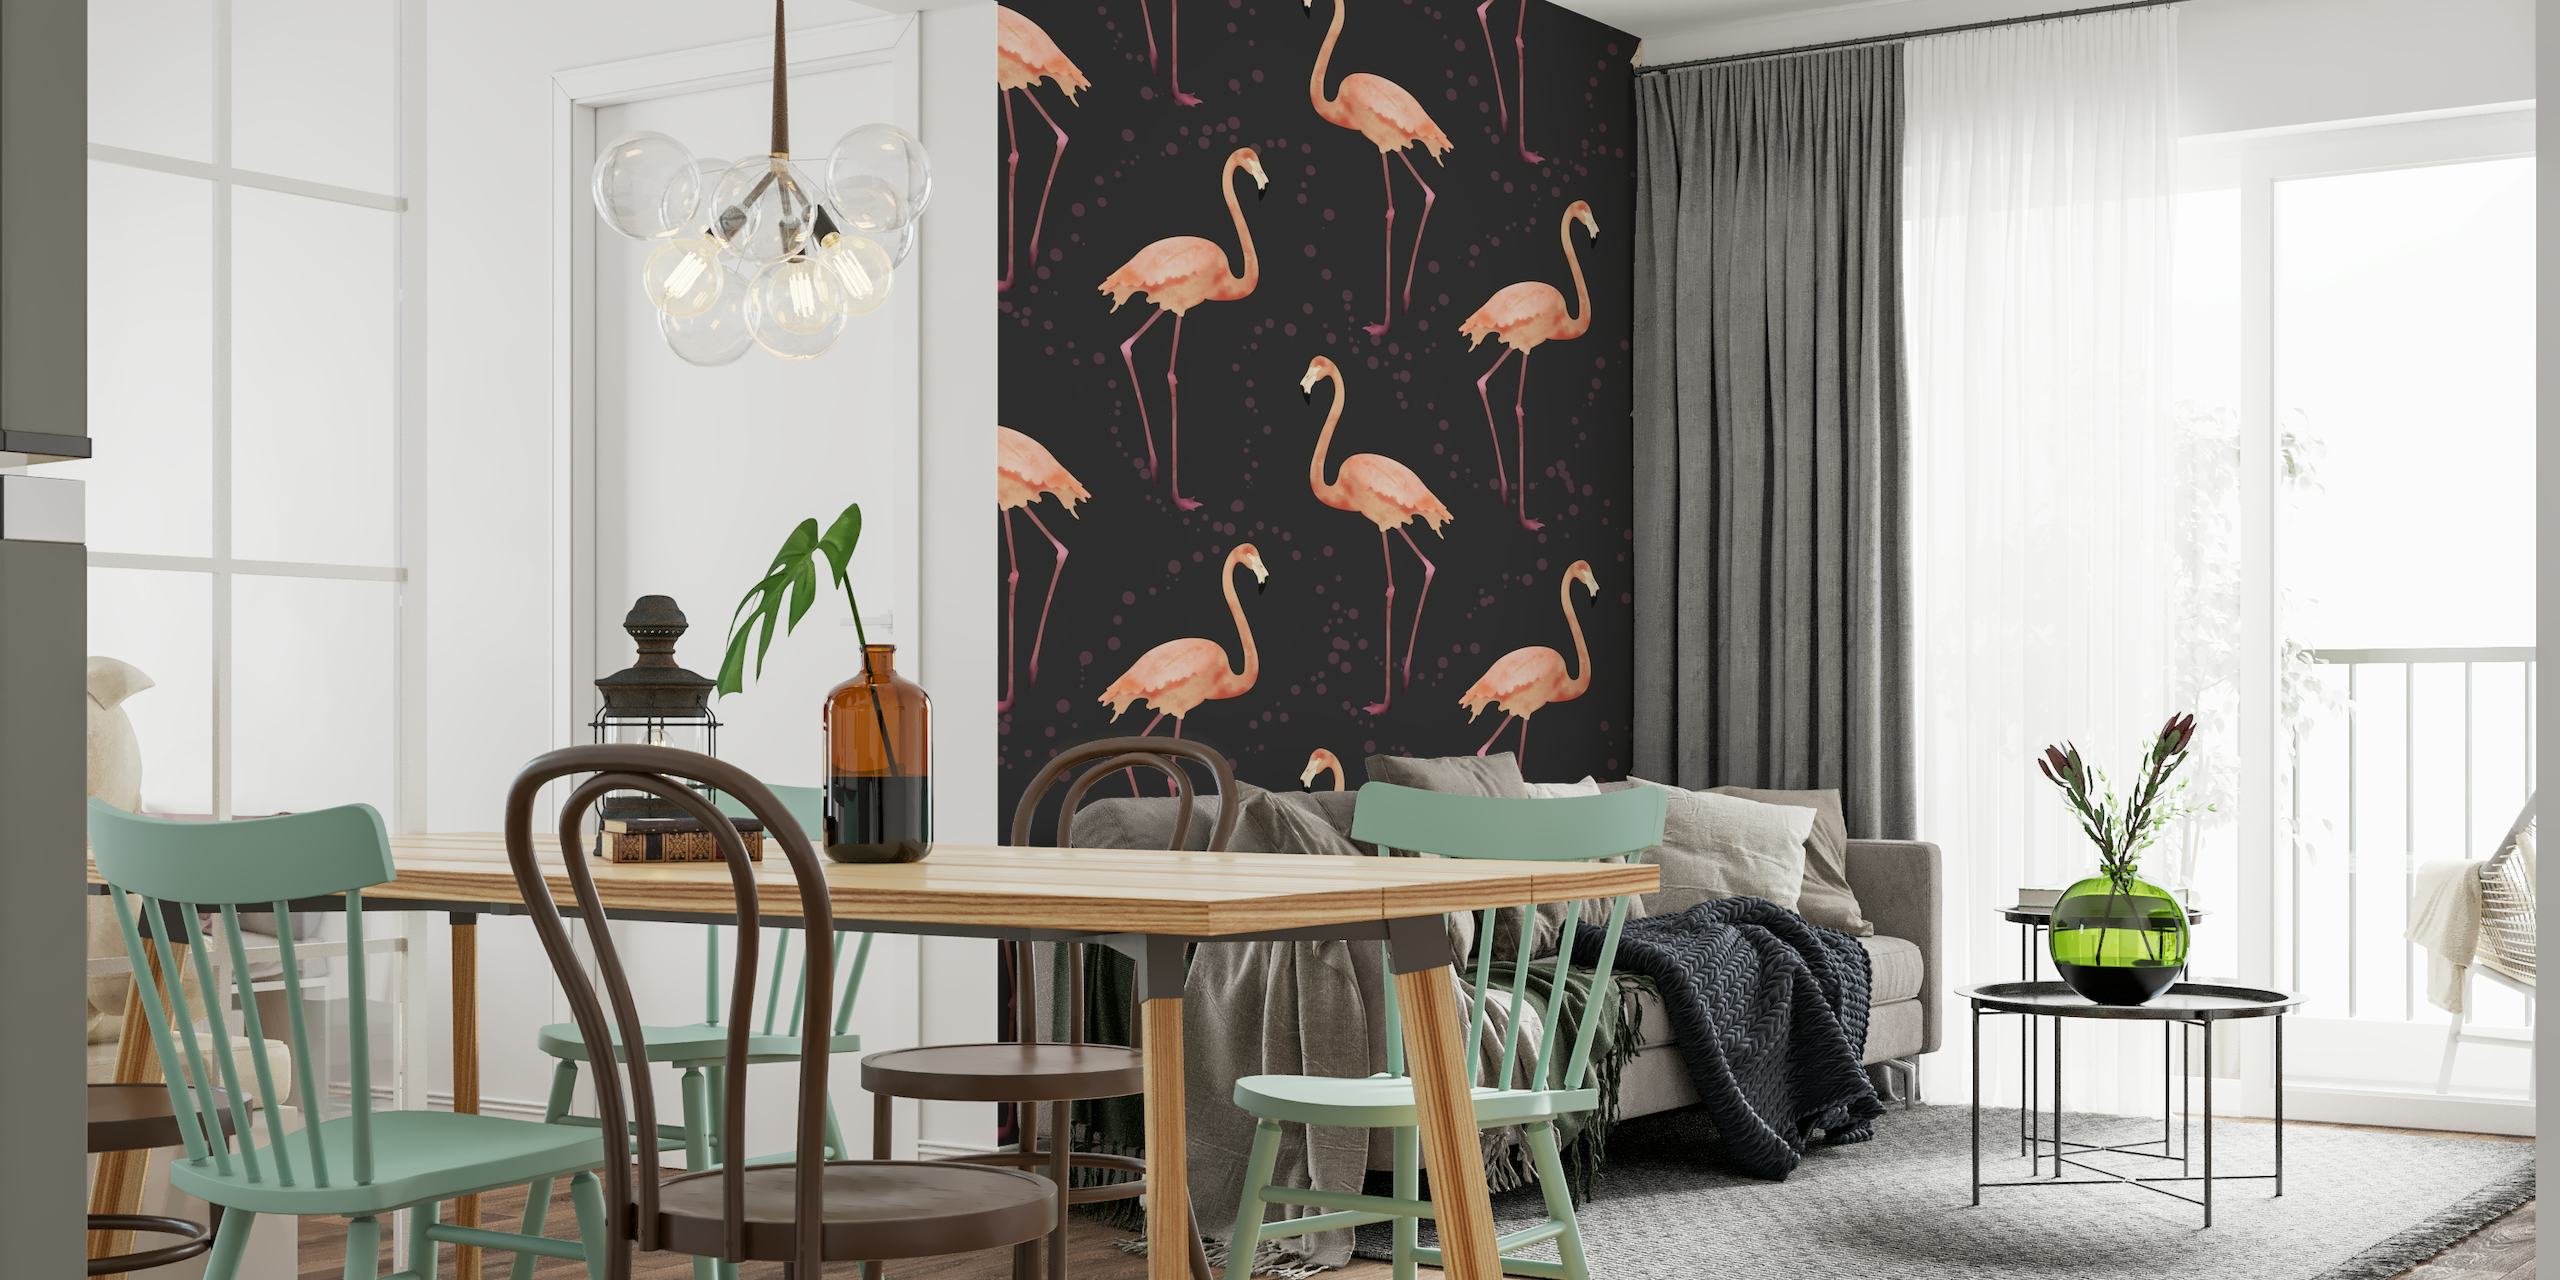 The Flamingo Dance fuchsia wallpaper